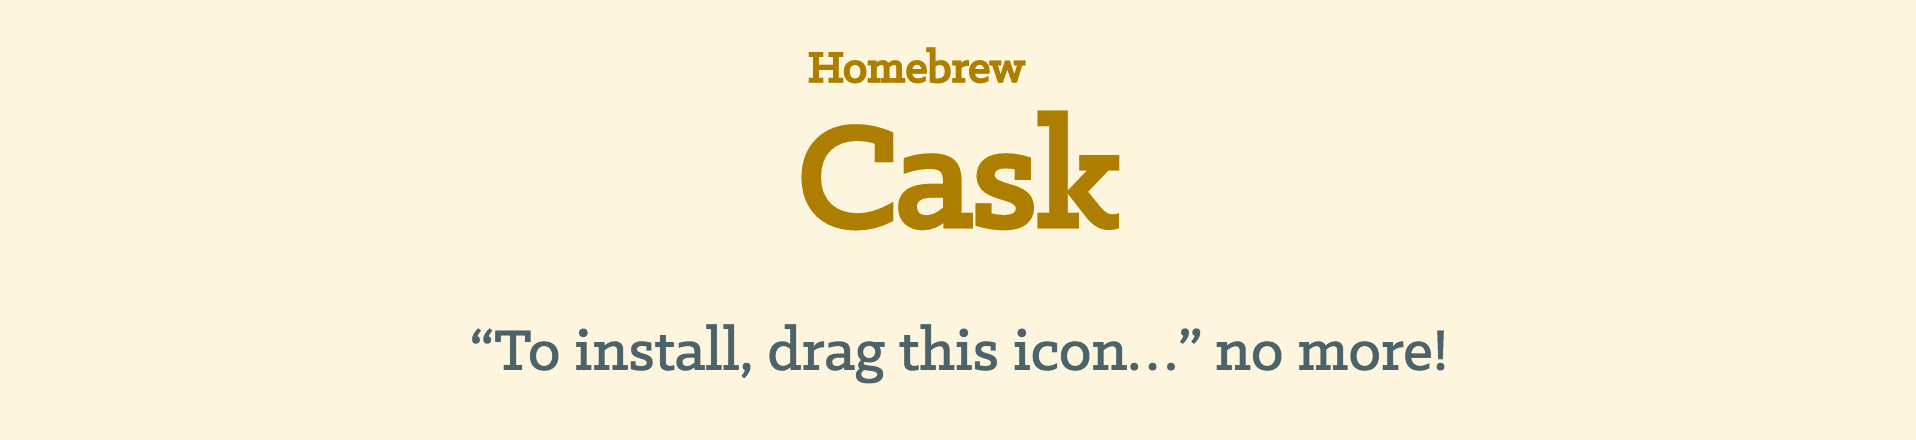 best homebrew cask